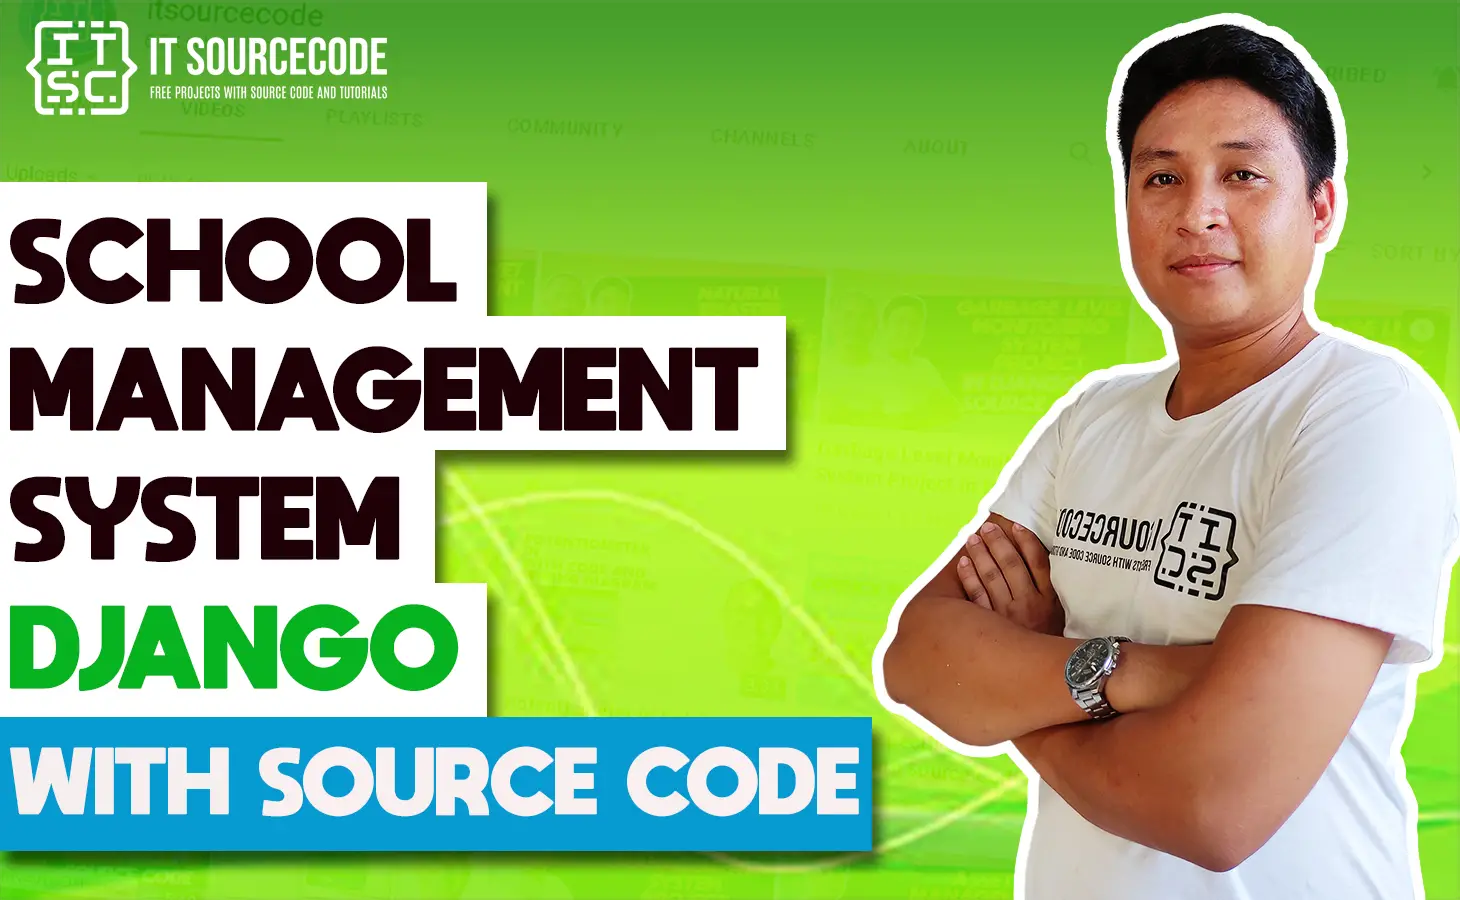 School Management System Django with Source Code